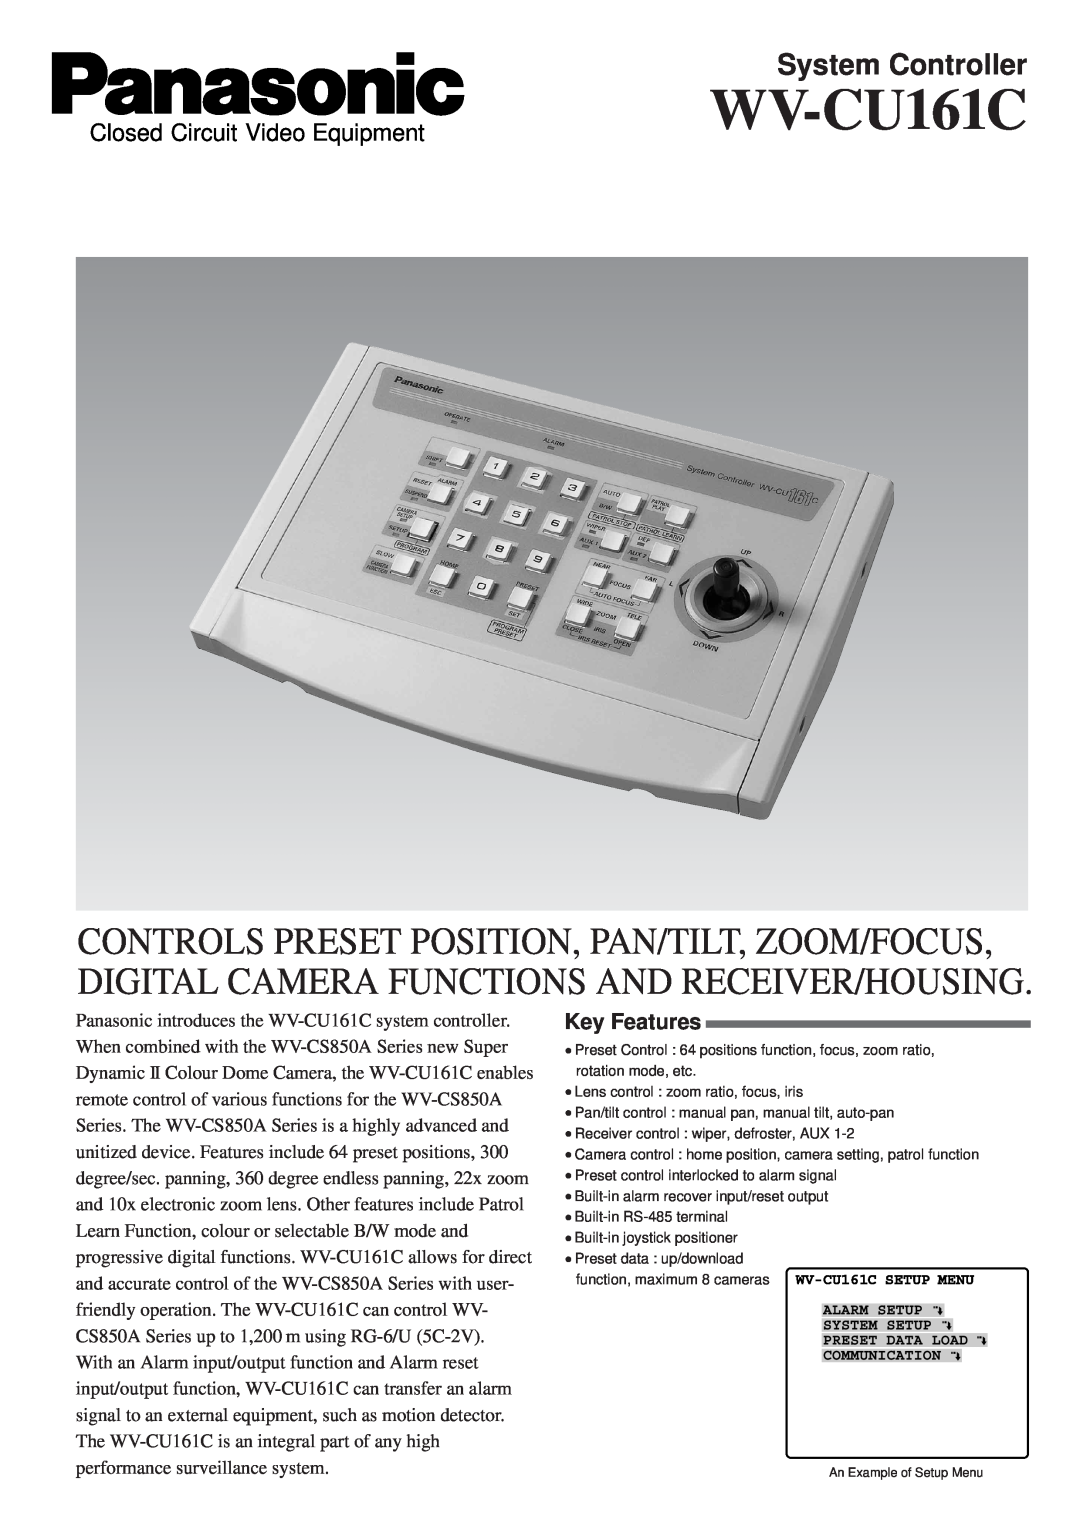 Panasonic WV-CU161C manual System Controller, Closed Circuit Video Equipment, Key Features 